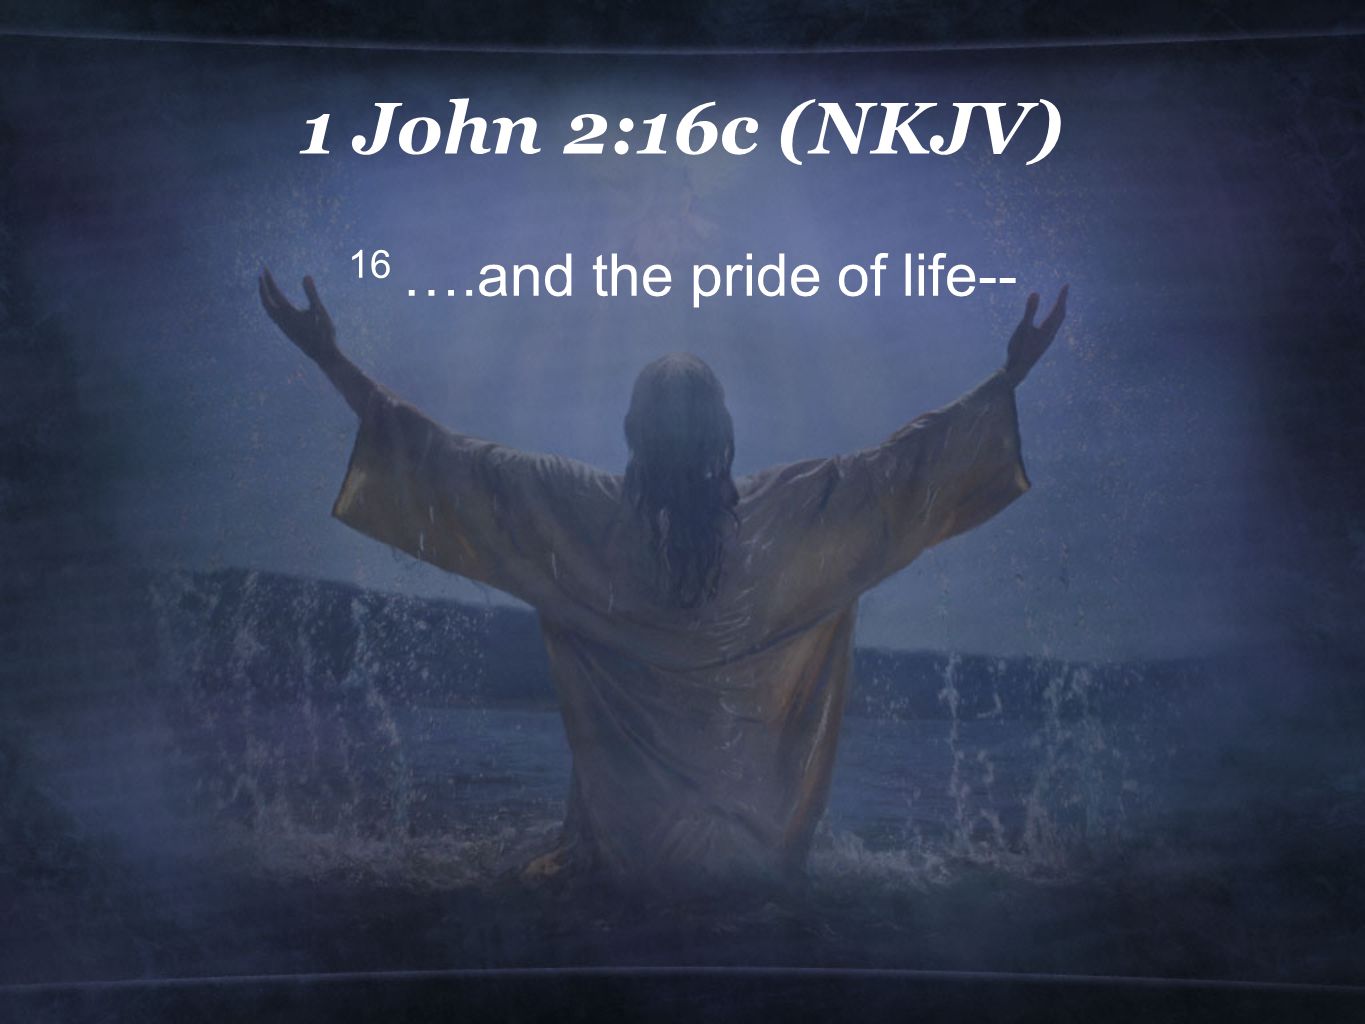 1 John 2:16c (NKJV) 16 ….and the pride of life--